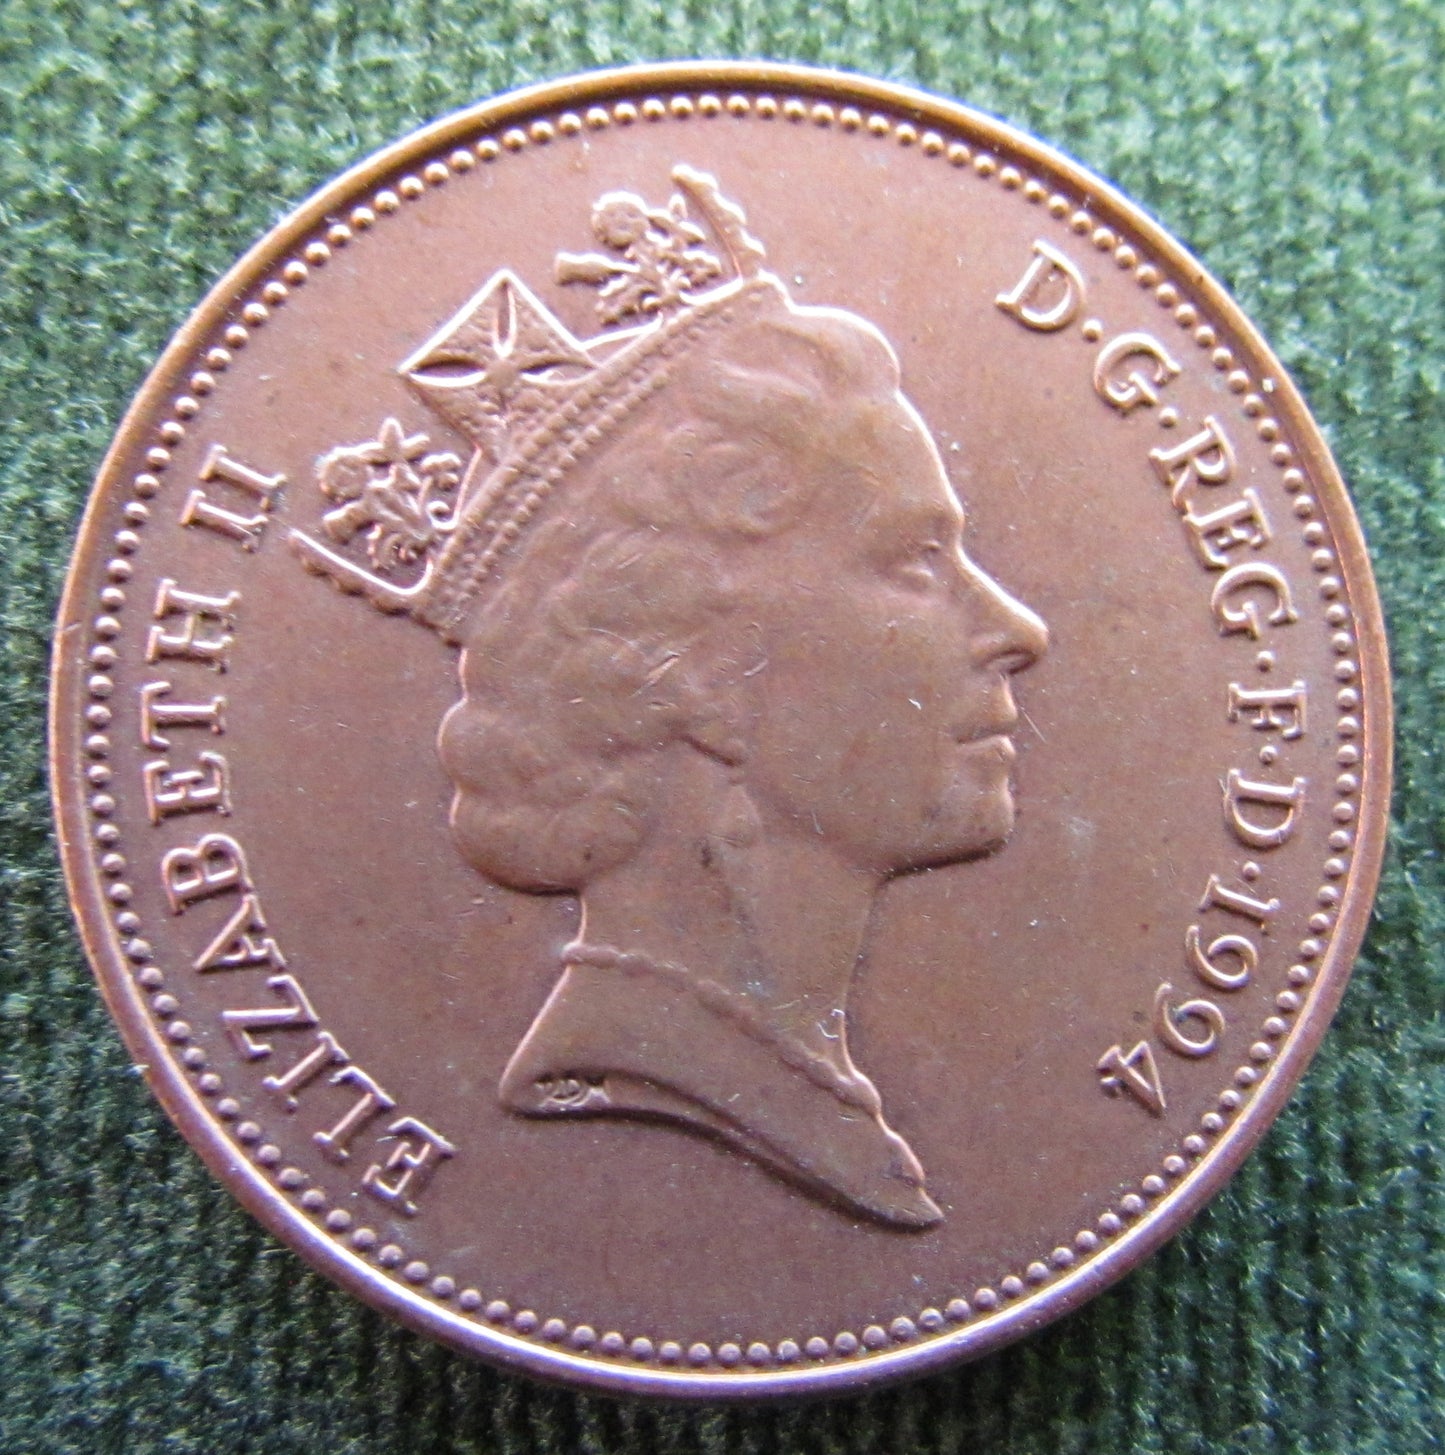 GB British UK English 1994 2 New Pence Queen Elizabeth II Coin